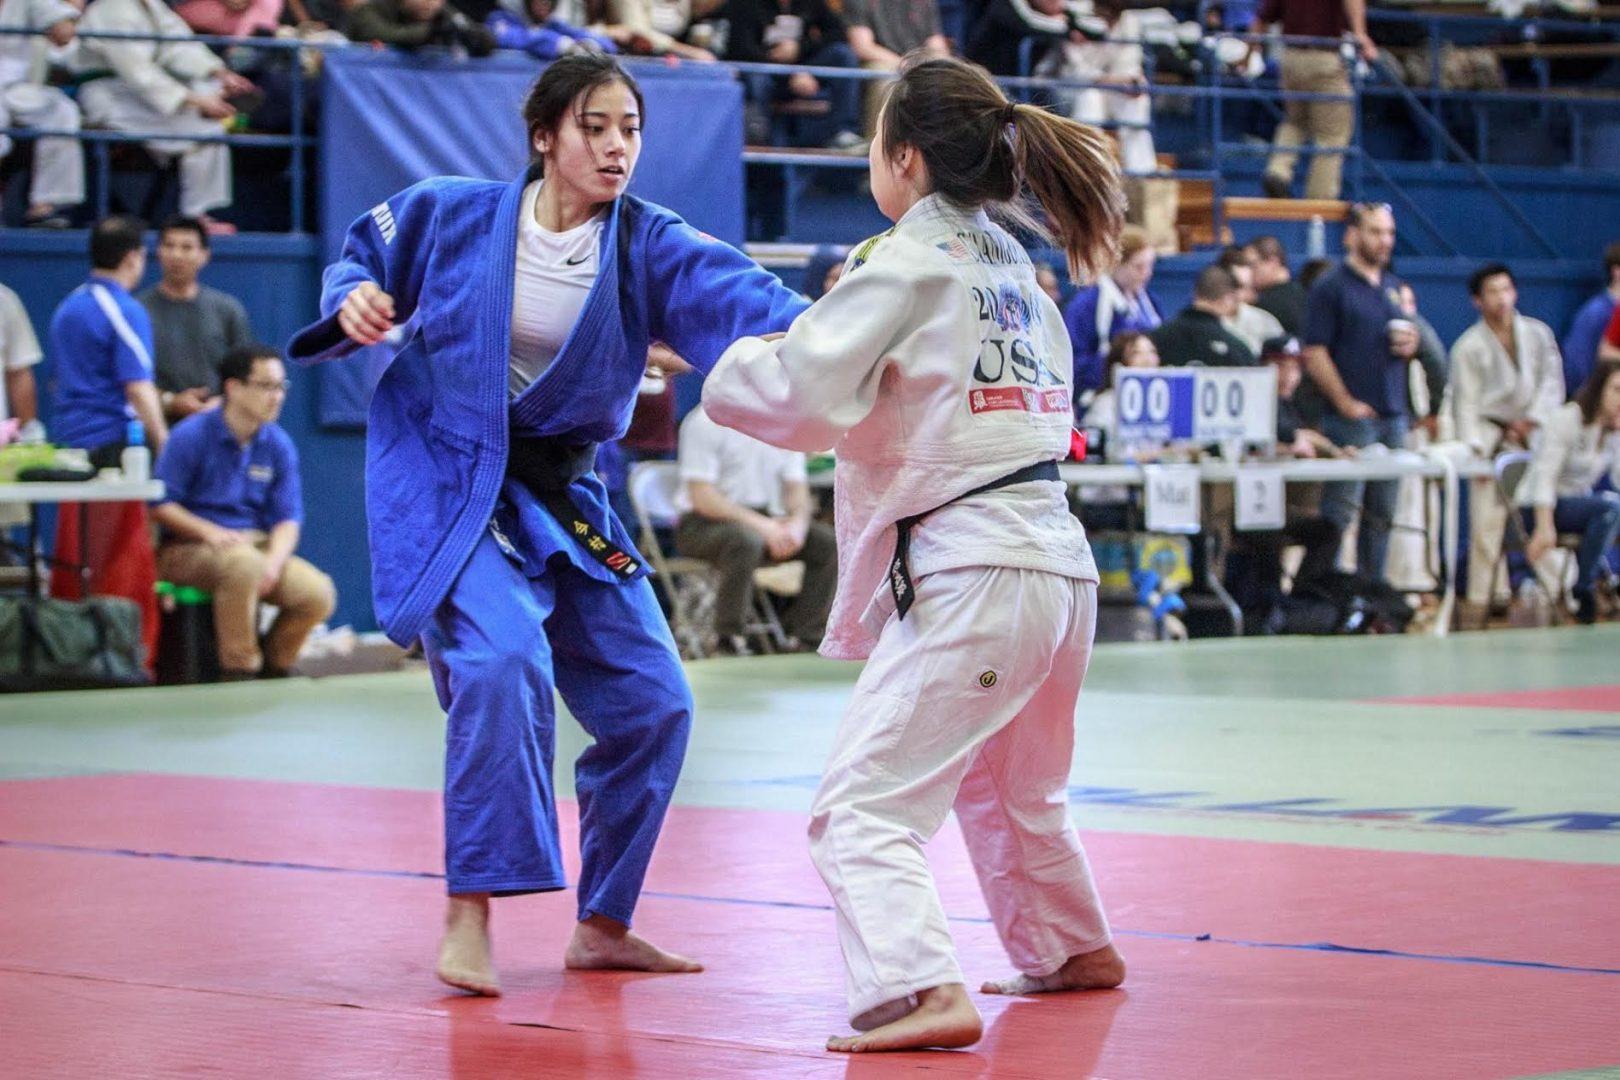 MIranda+Imamura+during+a+Judo+match.+%28Jovany+Gonzalez%2FFresno+State+Judo+Club%29